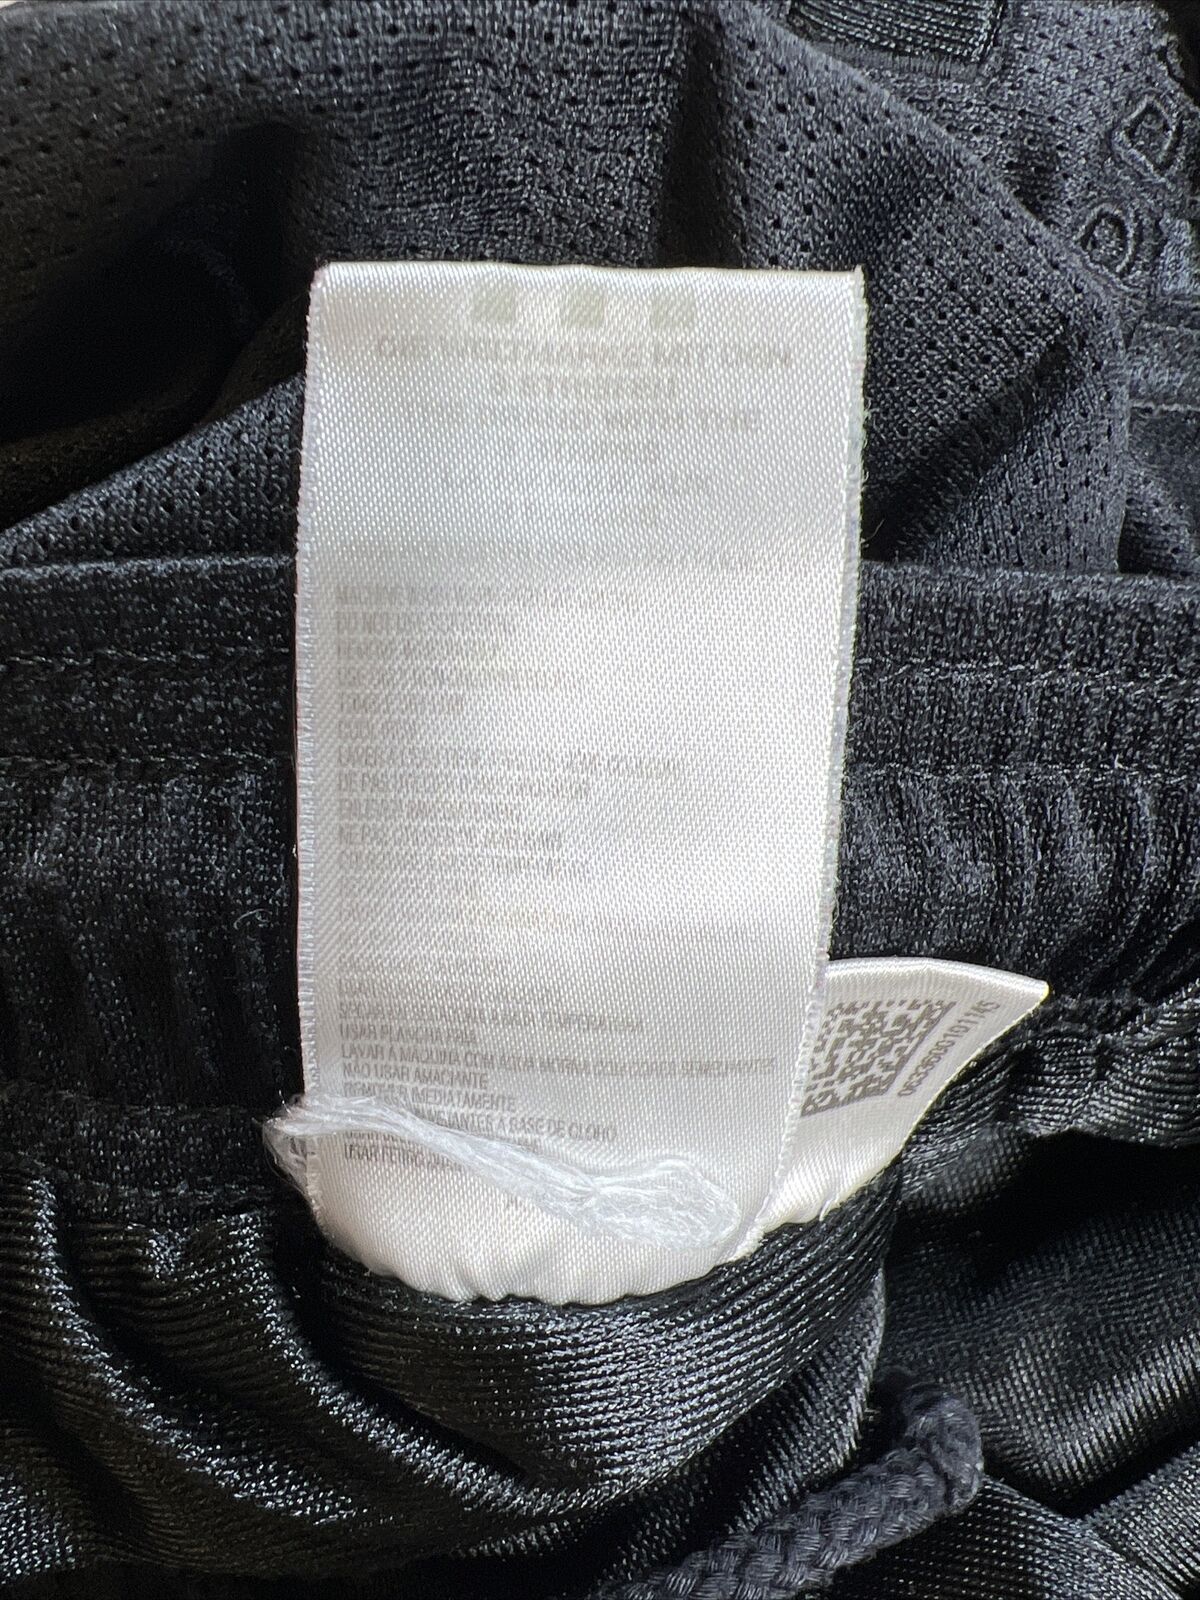 adidas Men's Black Mesh Lined Track Sweatpants - XL